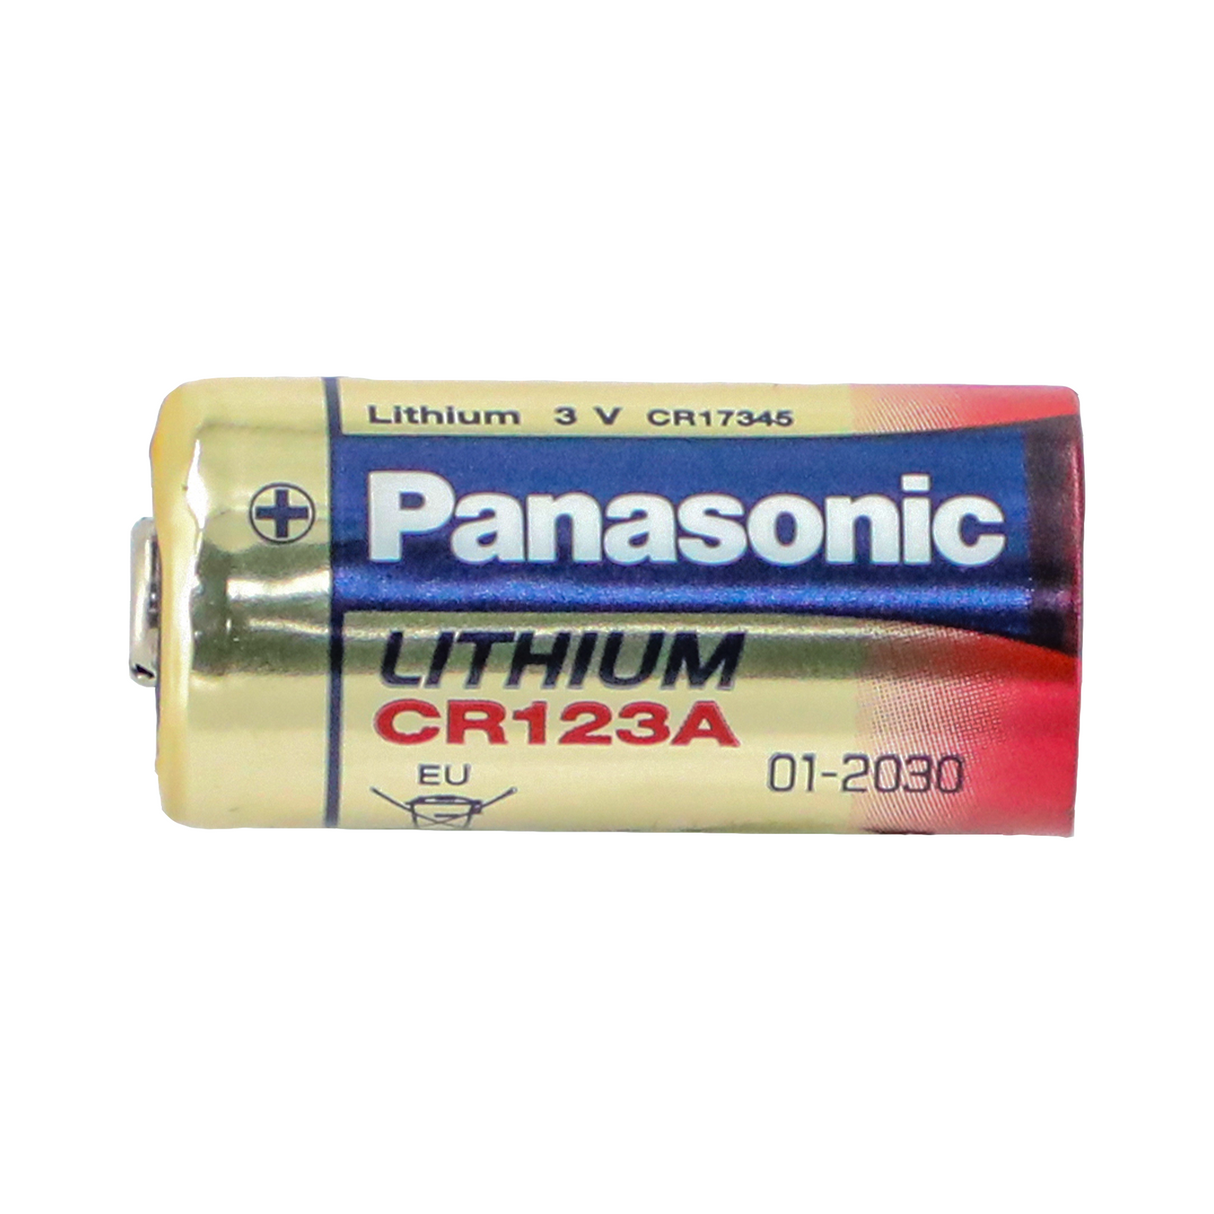 Lithium CR123 Battery